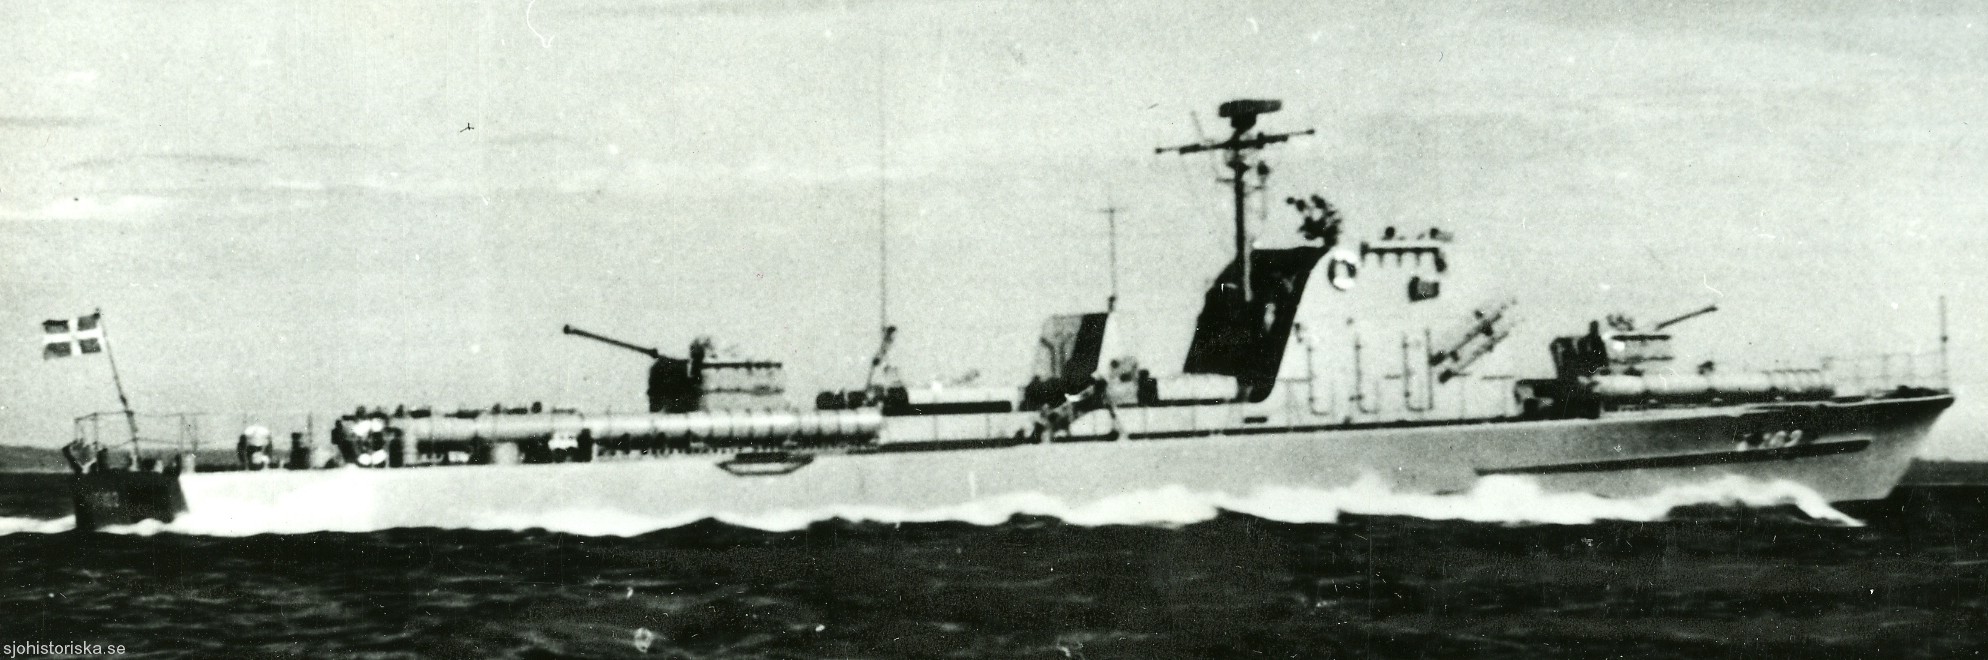 t102 plejad hms hswms class fast attack craft torpedo boat vessel swedish navy svenska marinen 11